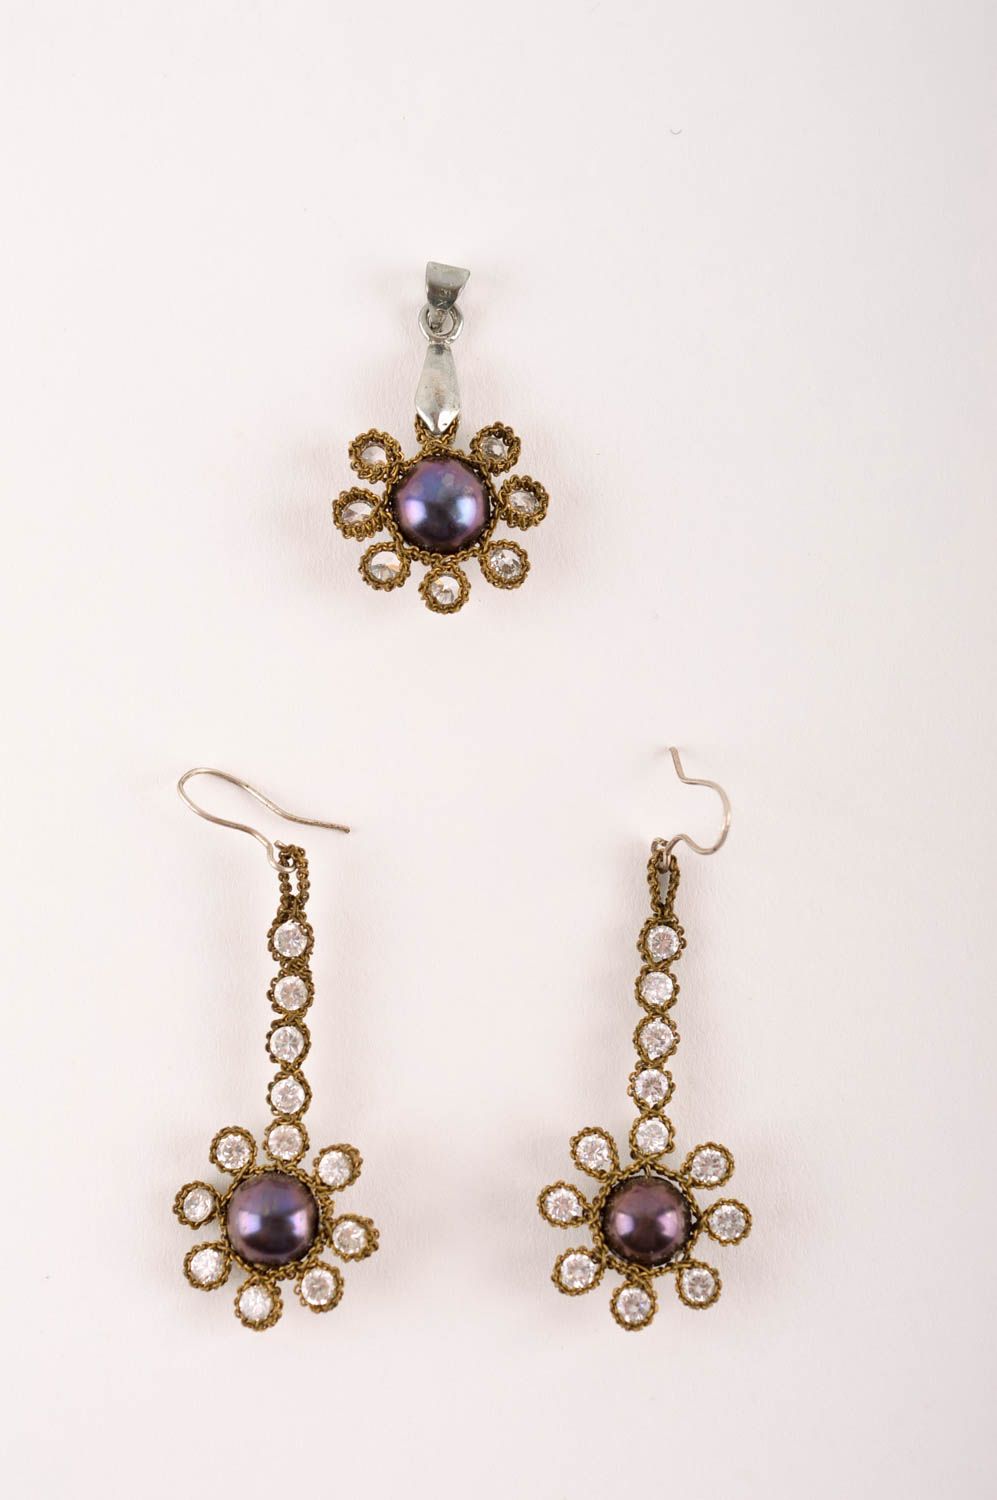 Handmade metal jewelry set metal earrings pendant necklace fashion trends photo 2